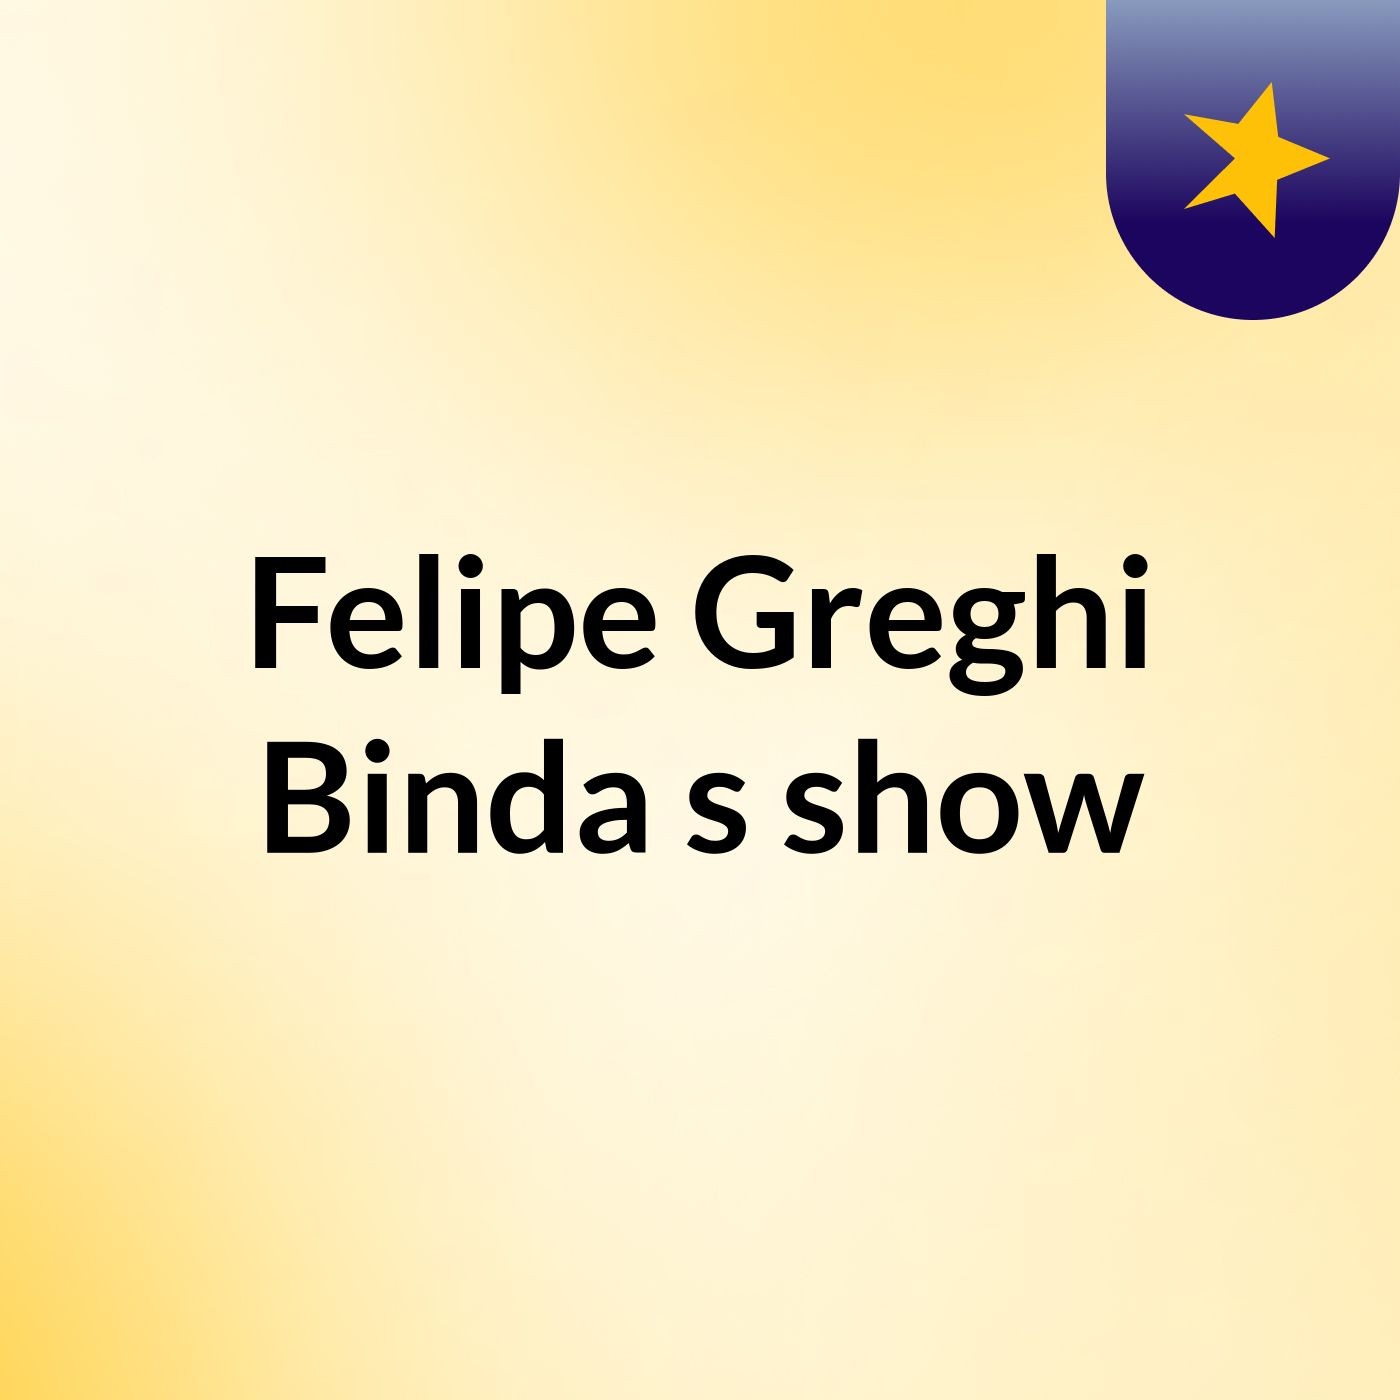 Felipe Greghi Binda's show